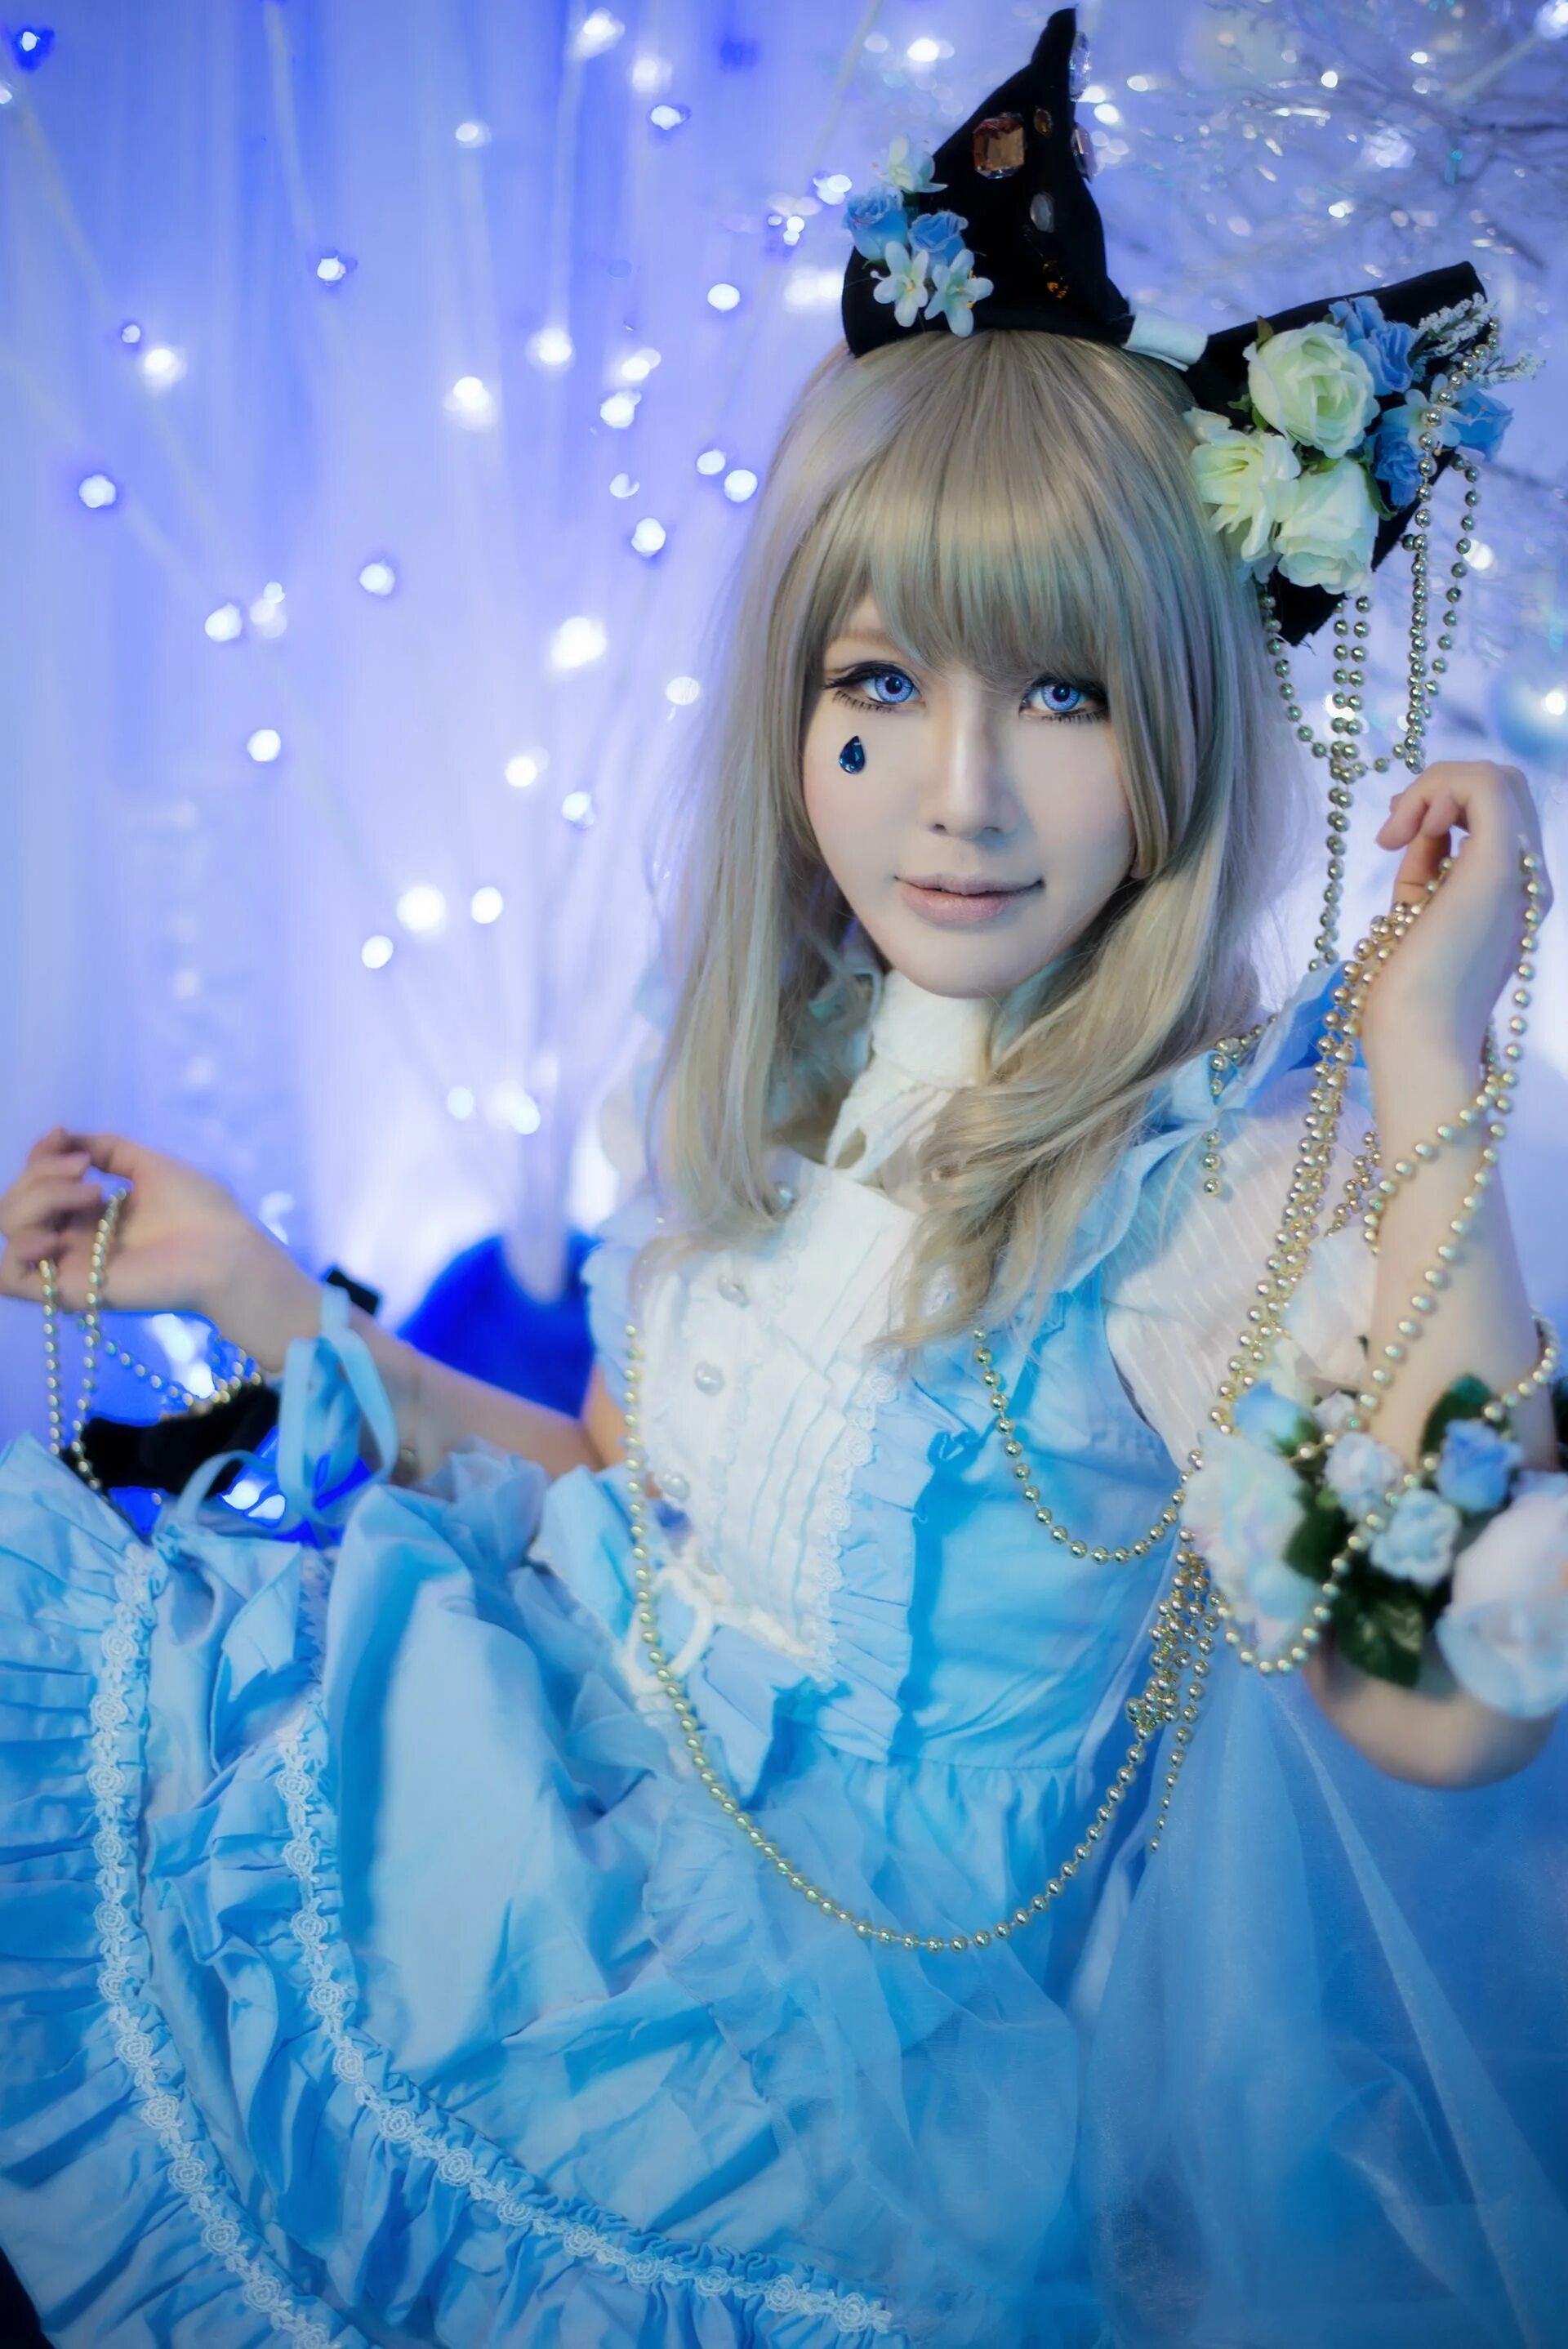 Алиса Япония. Алиса на японском. Алиса прекрасная. Девочка Алиса в Японии. Алиса можно покрасивее